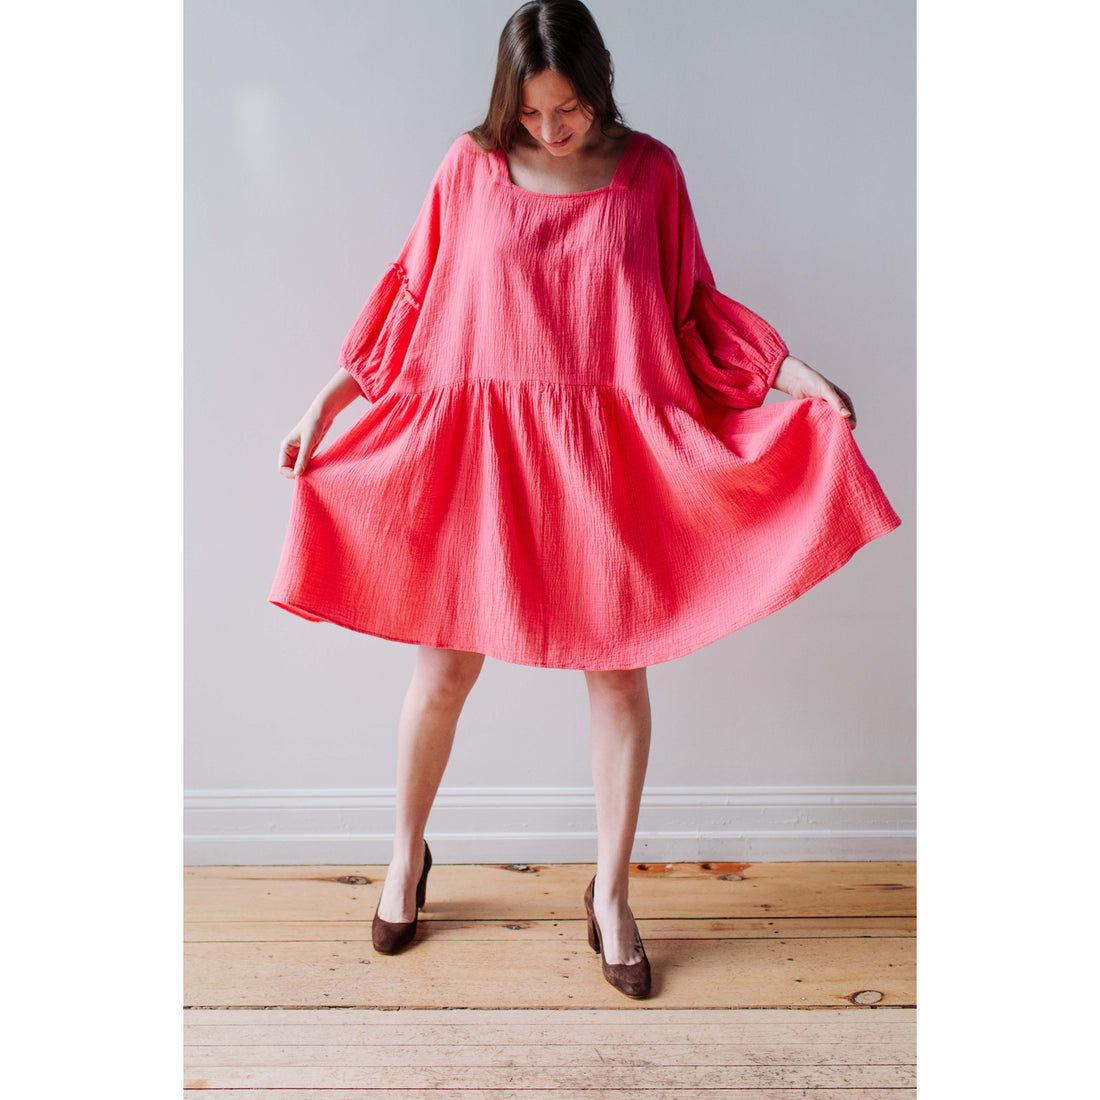 Anaak Miro Smock Dress in Pink